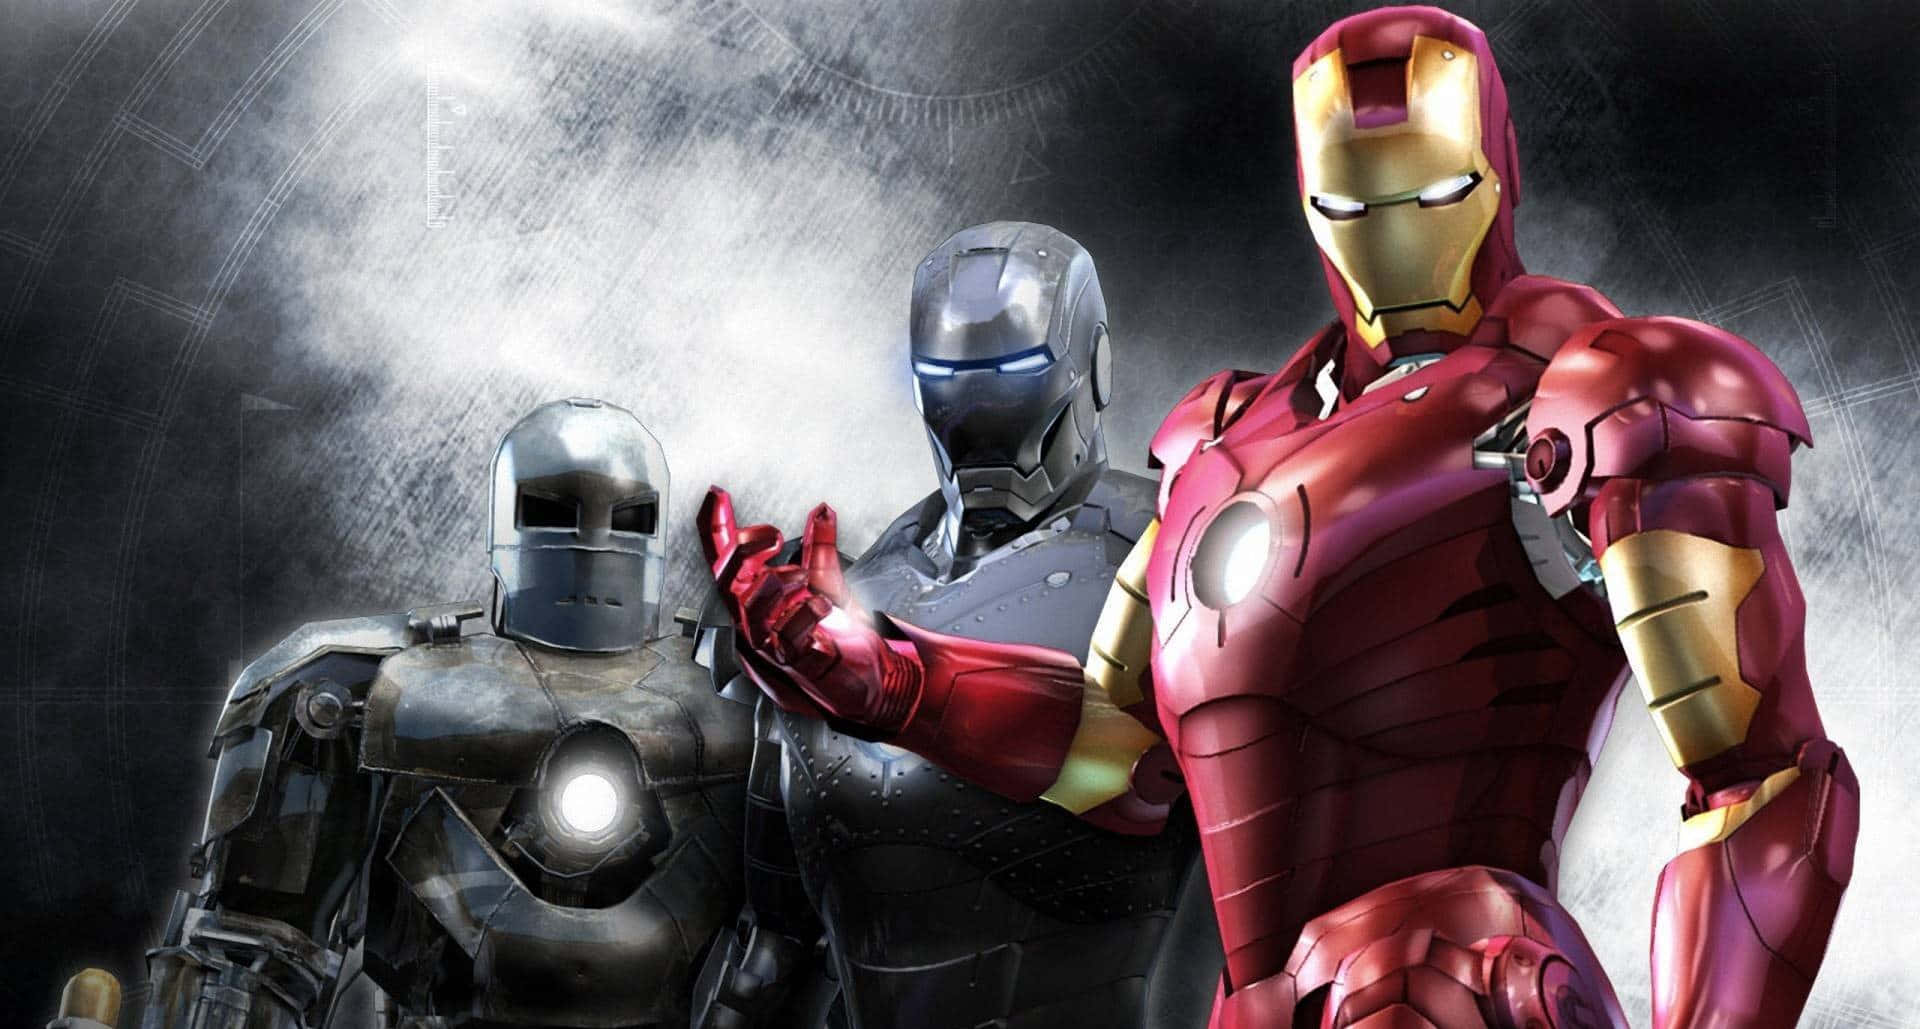 The Invincible Iron Man Suit Wallpaper